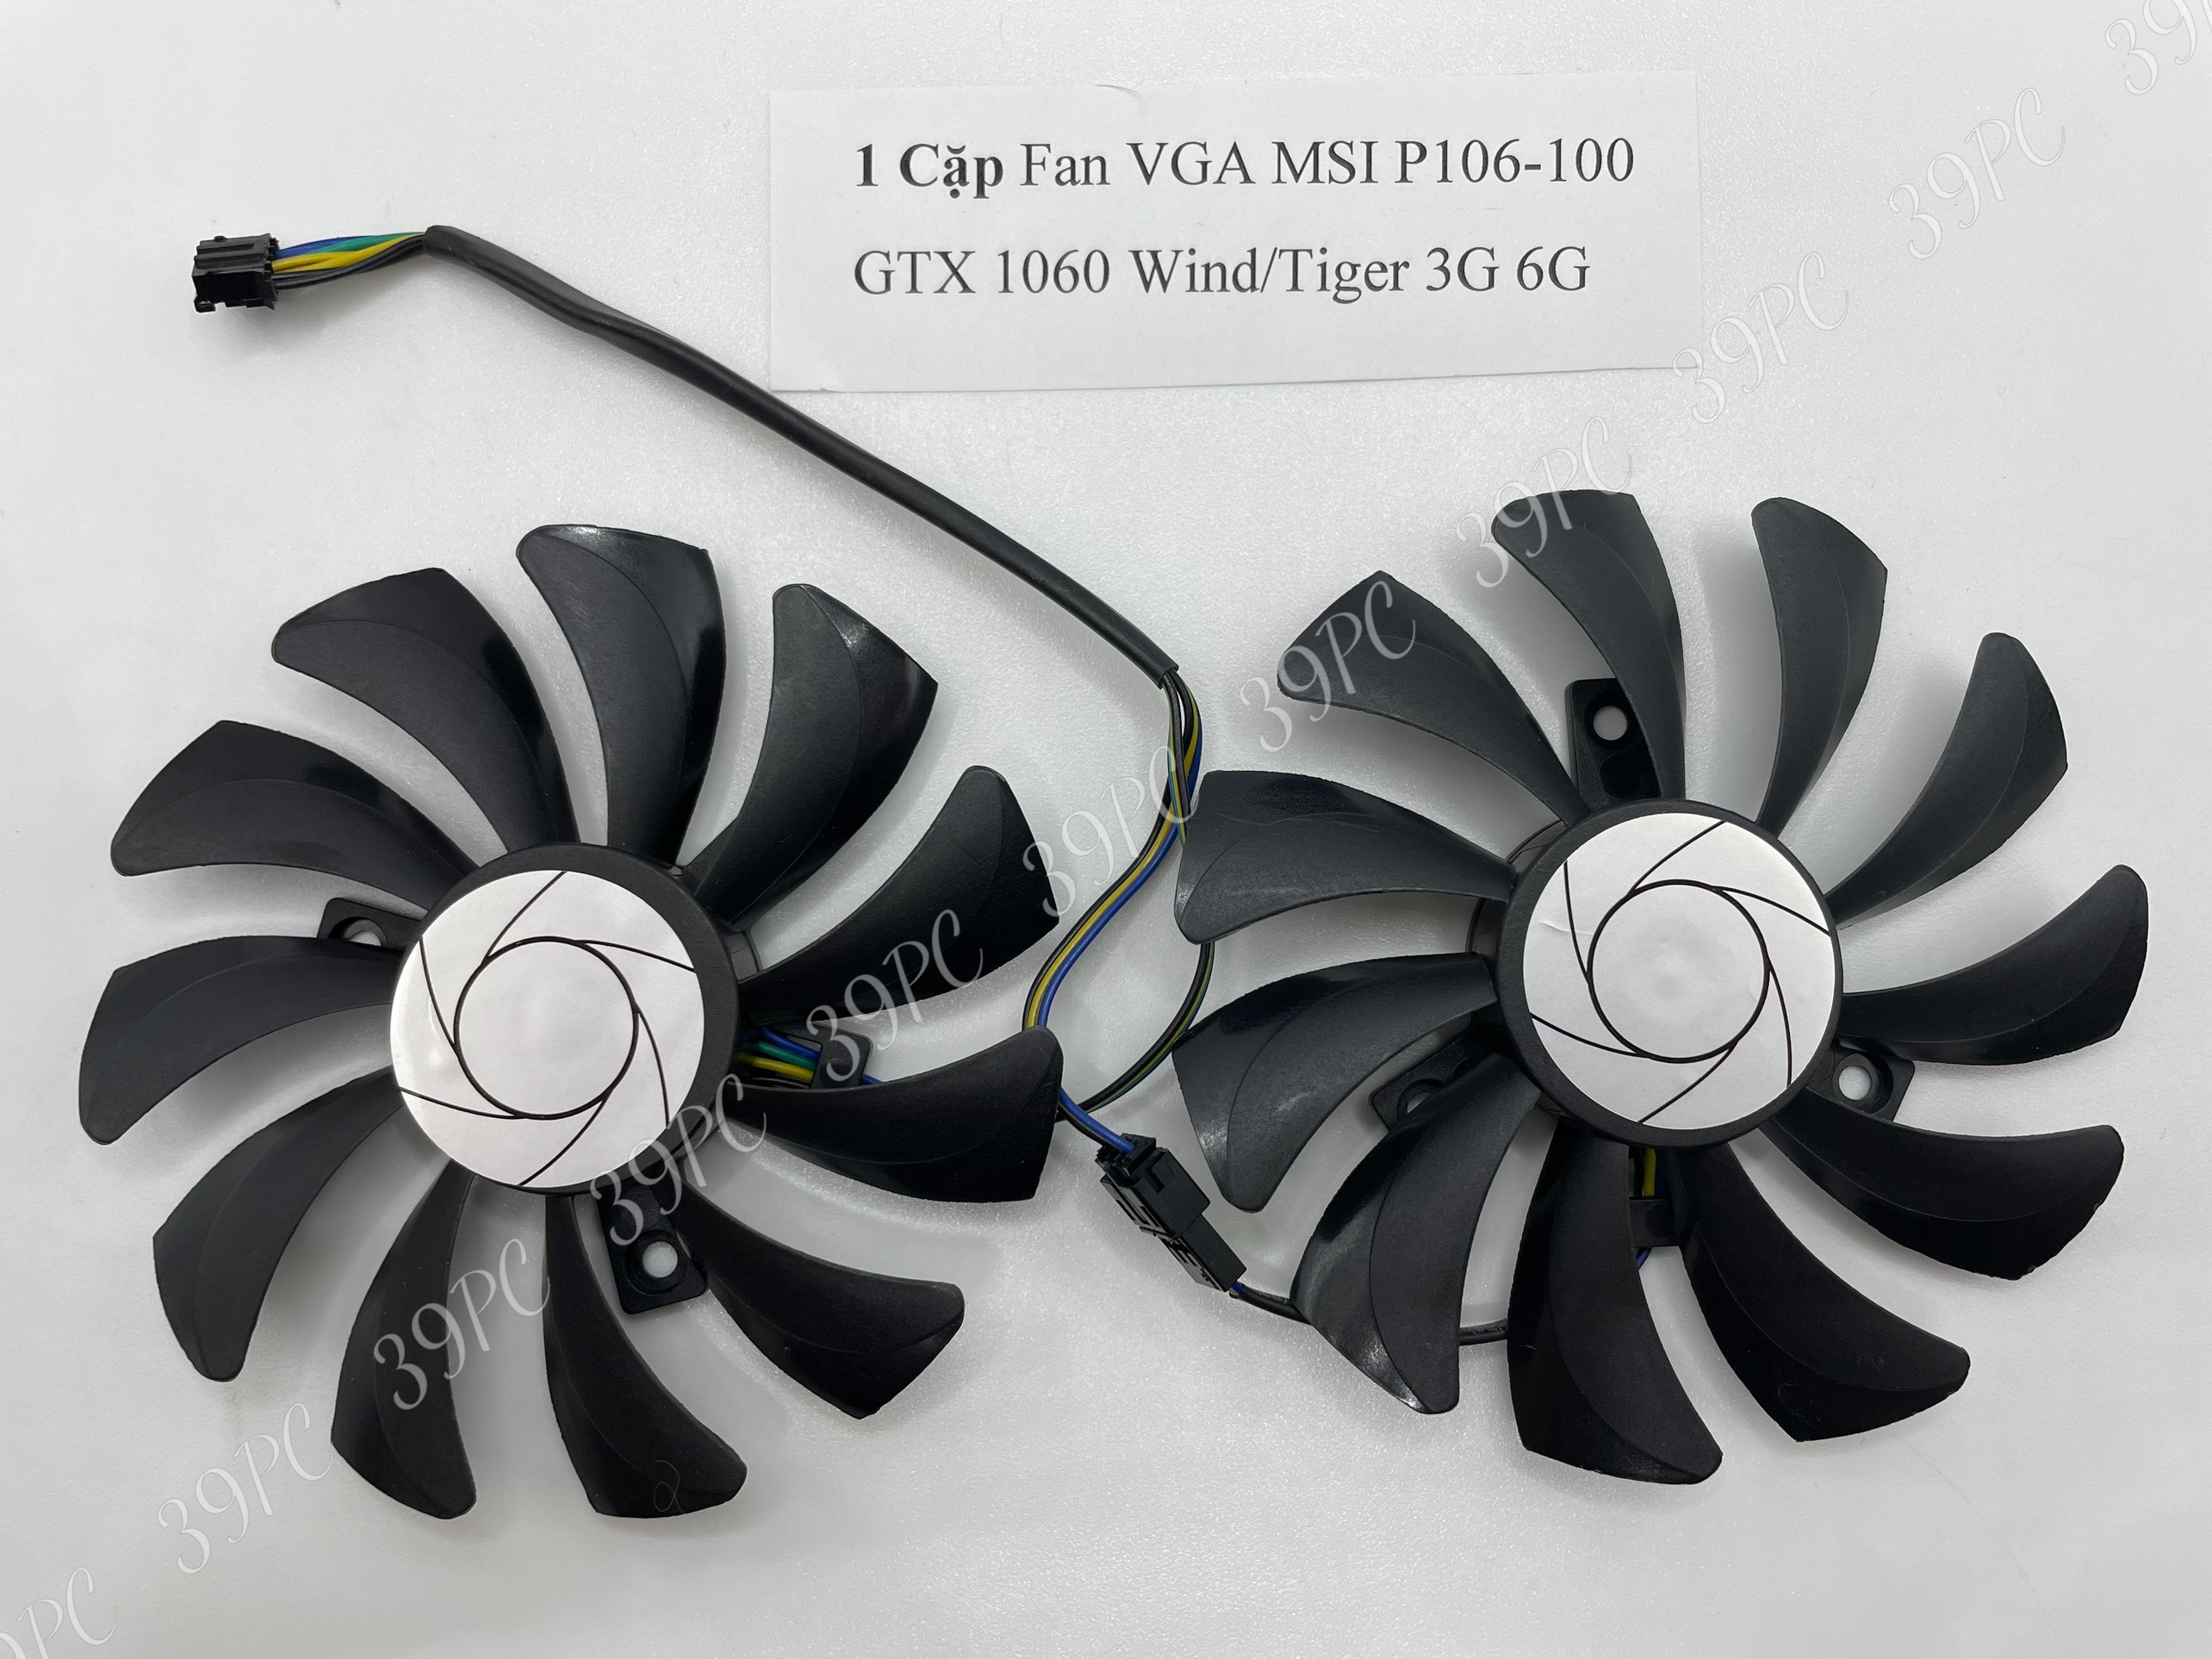 39PC 1 Cặp Fan VGA MSI P106-100 GTX 1060 Wind Tiger 3G 6G